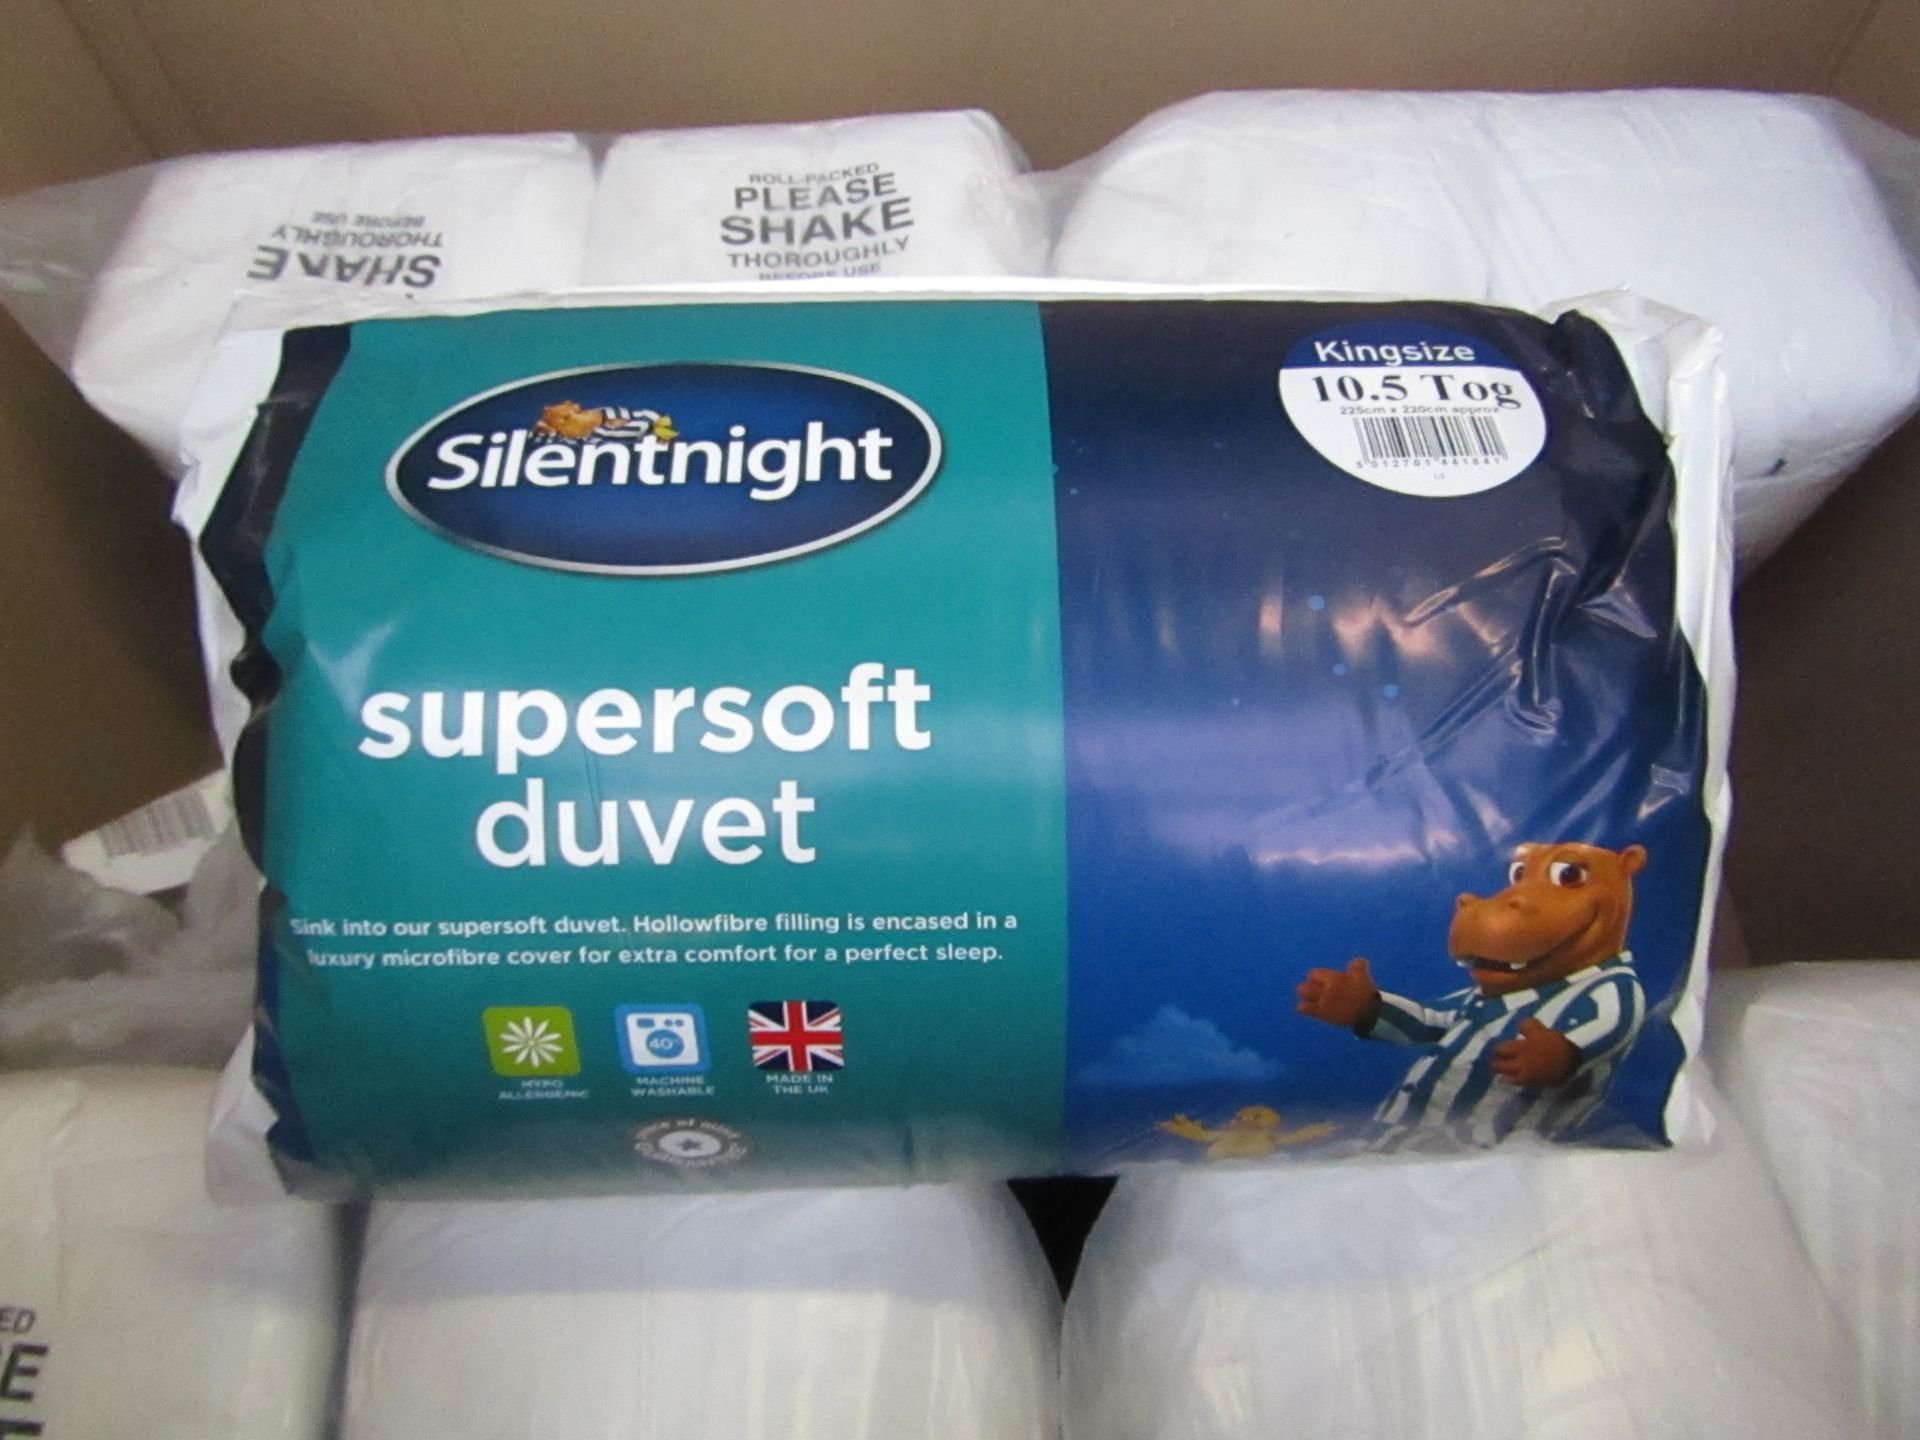 Silentnight Supersoft duvet, kingsize, 10.5 Tog, brand new and packaged. RRP £24.99